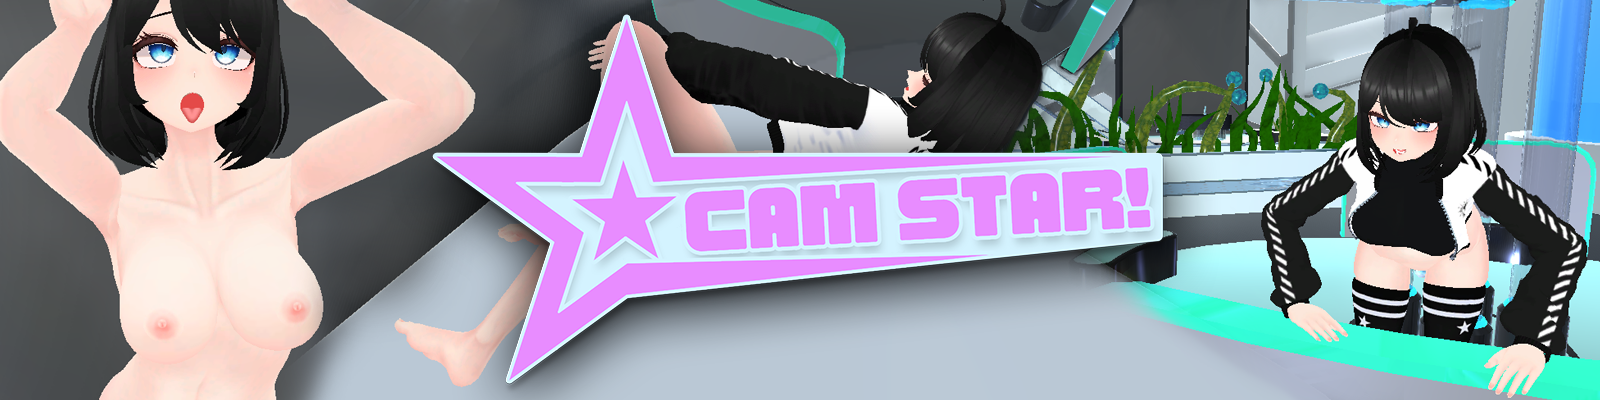 Cam Star!